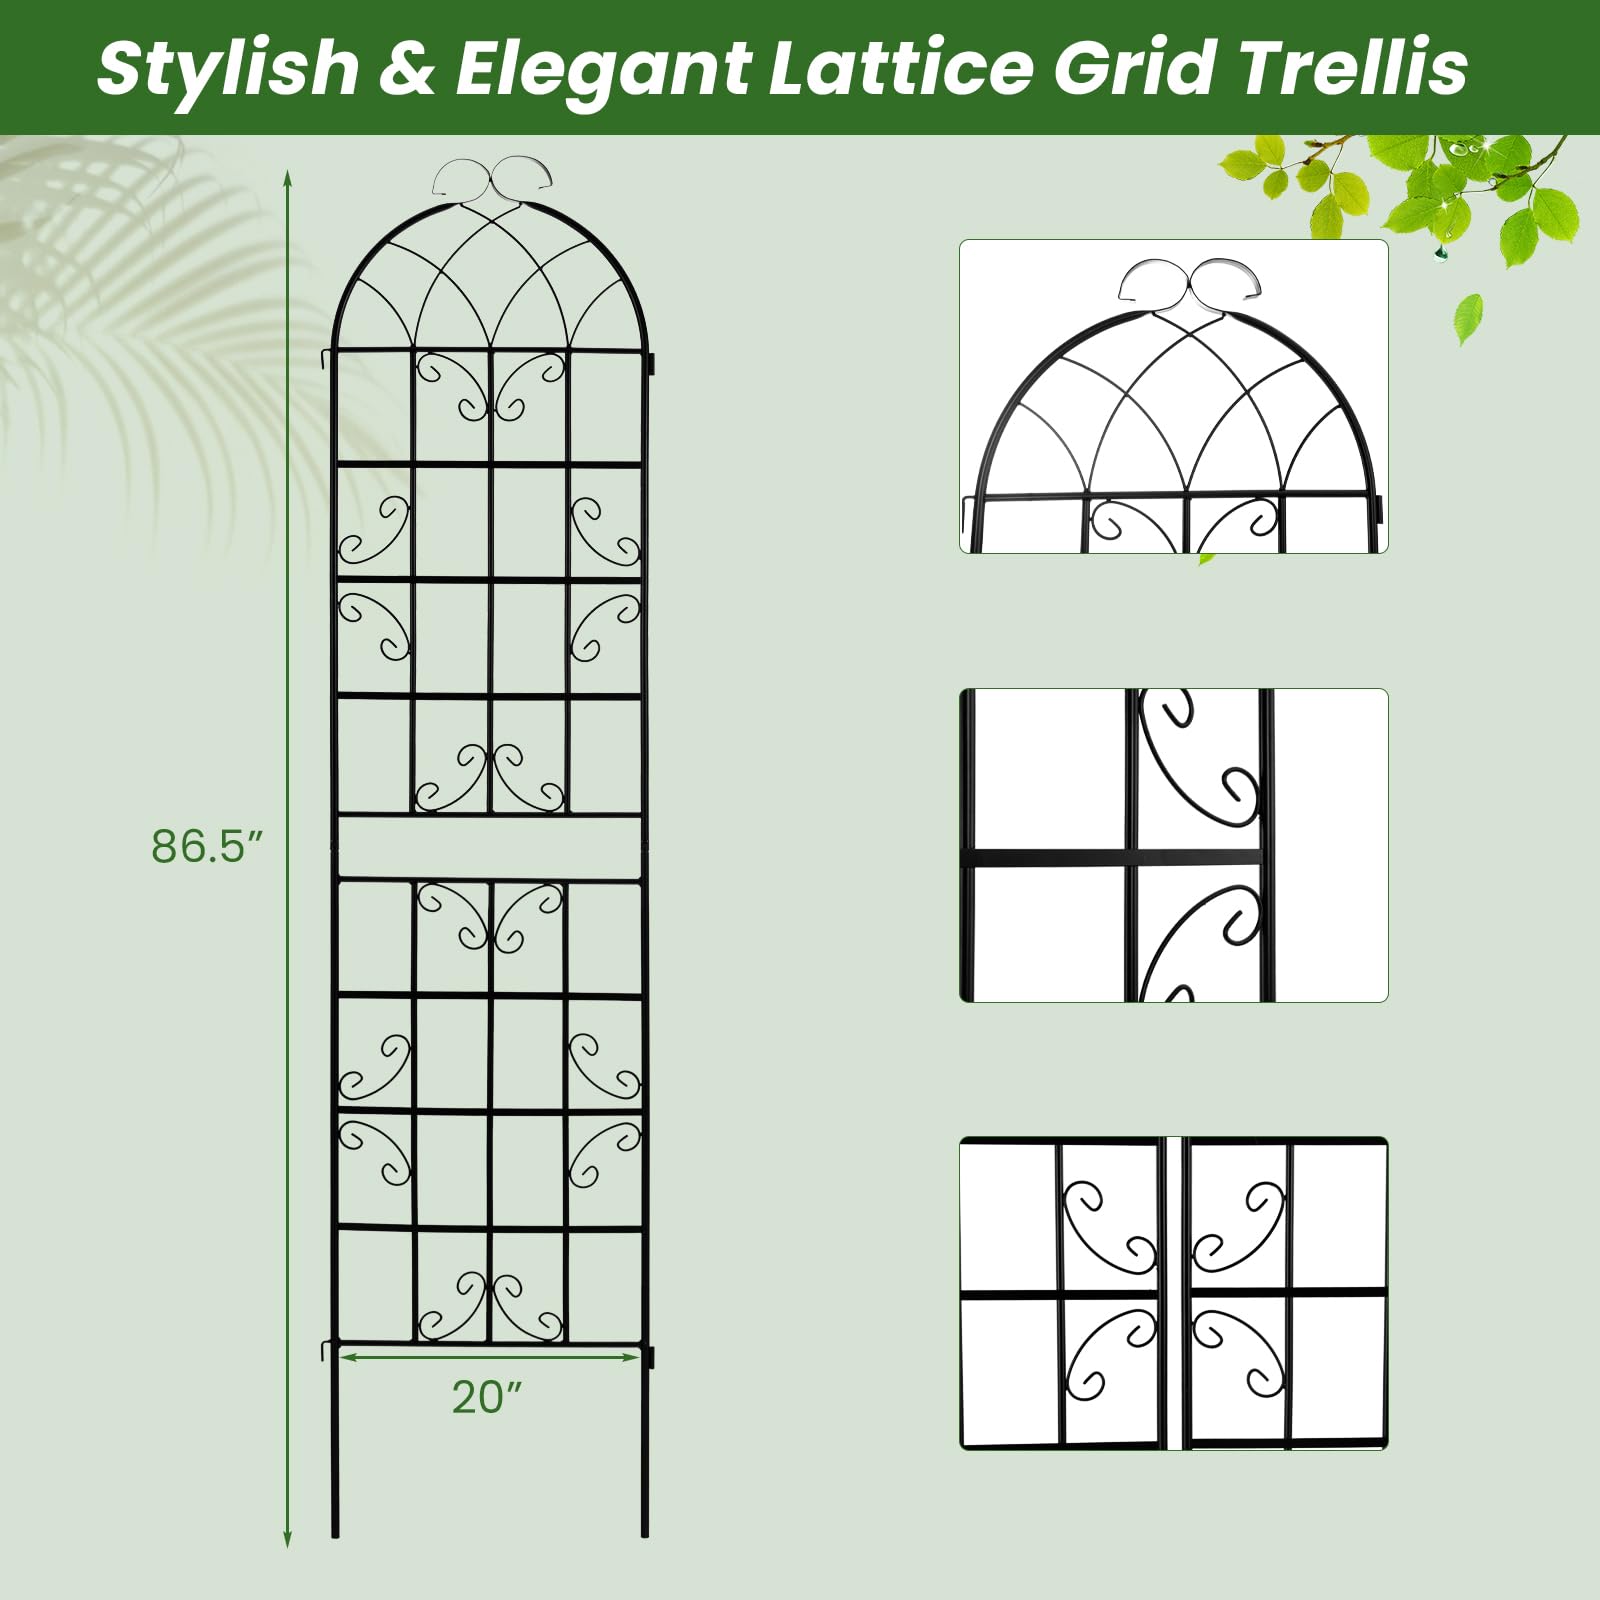 Giantex 2 Pack Trellis for Climbing Plants Outdoor, 7 FT Tall Galvanized Steel Garden Trellis